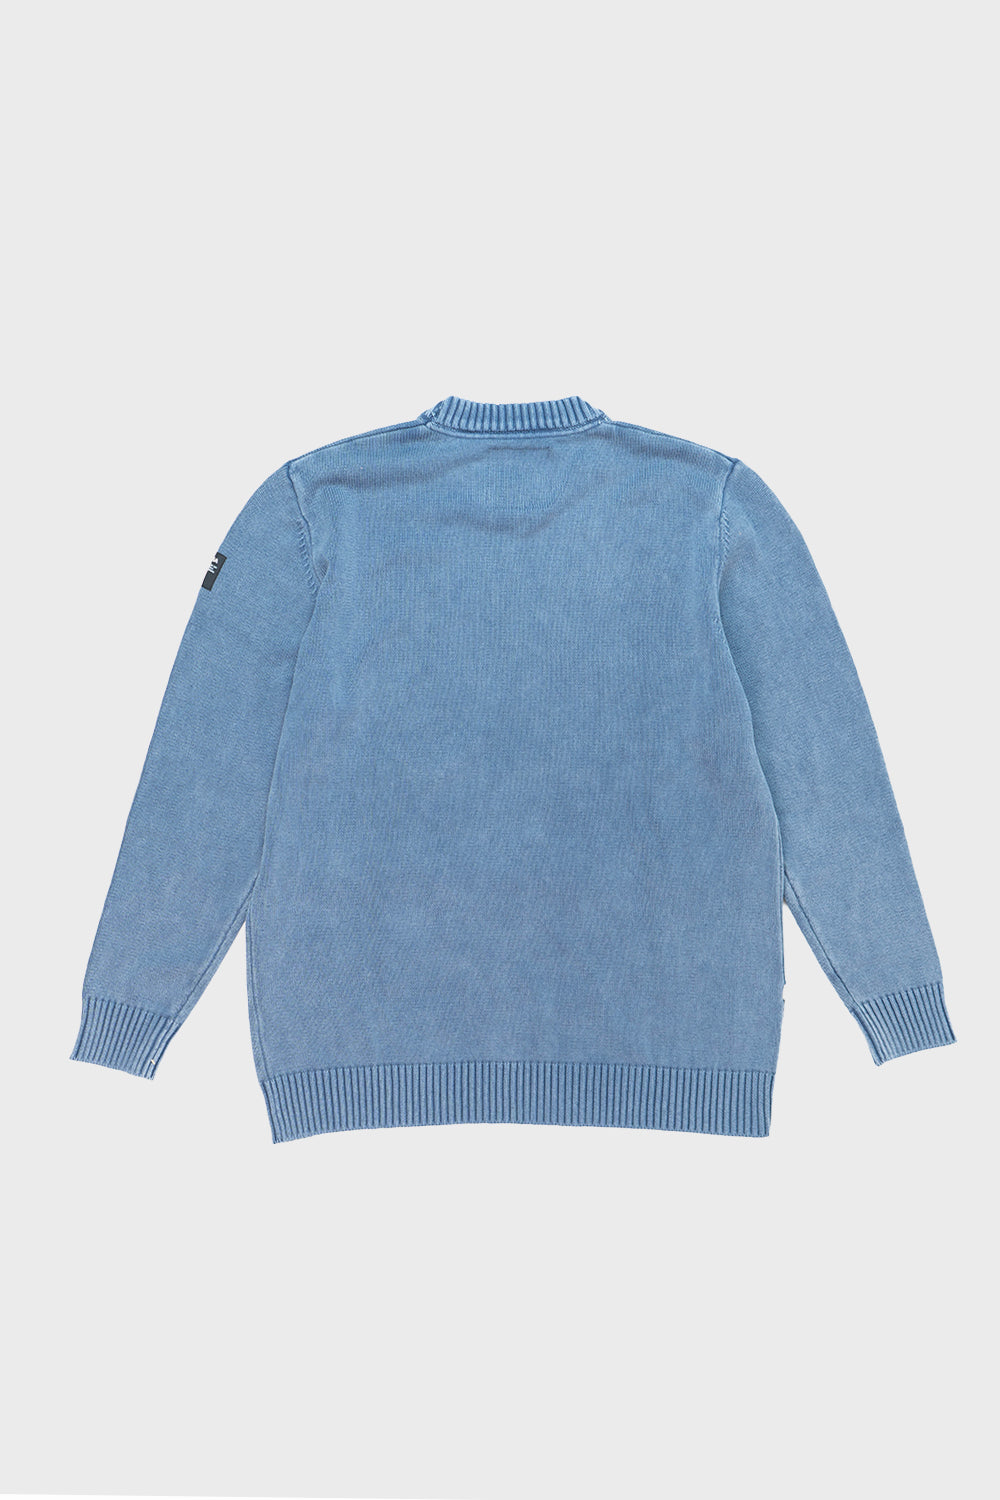 Sweater Essential Orgánico Hombre Azul | Wild Lama